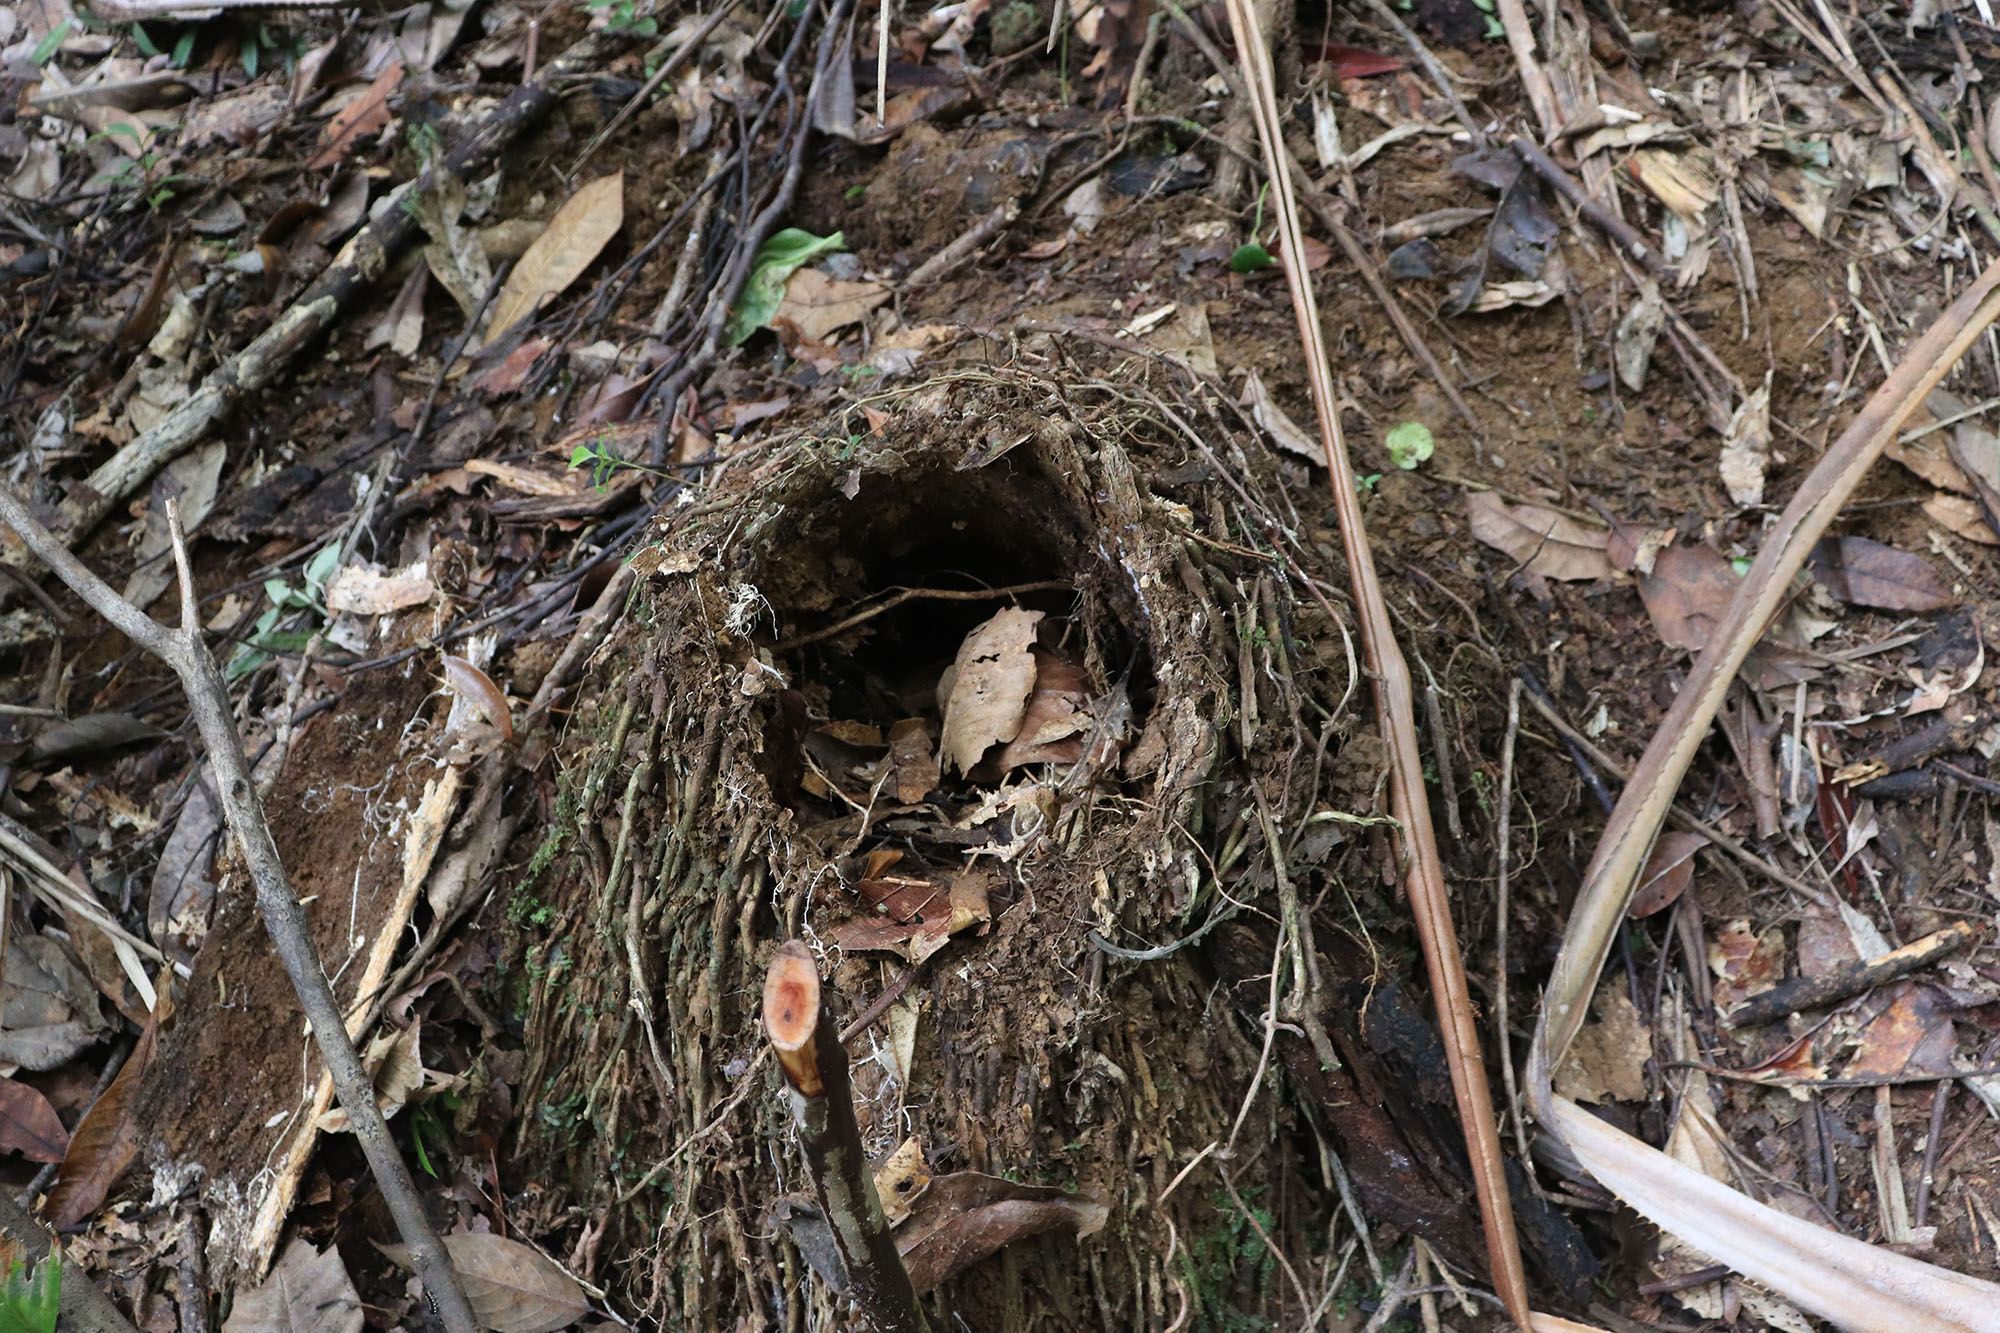 mindanao treeshrew nest